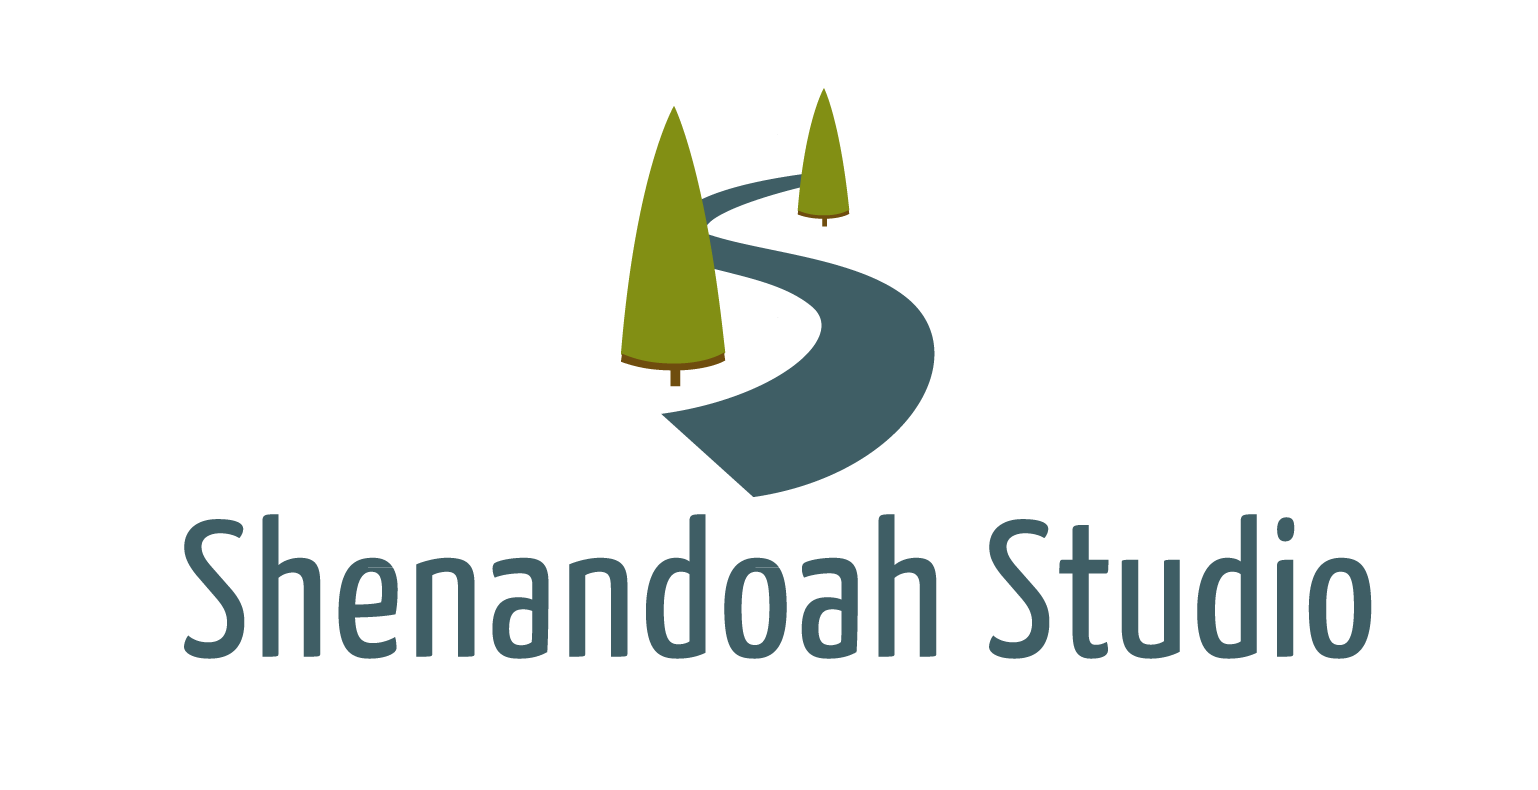 Shenandoah Studio